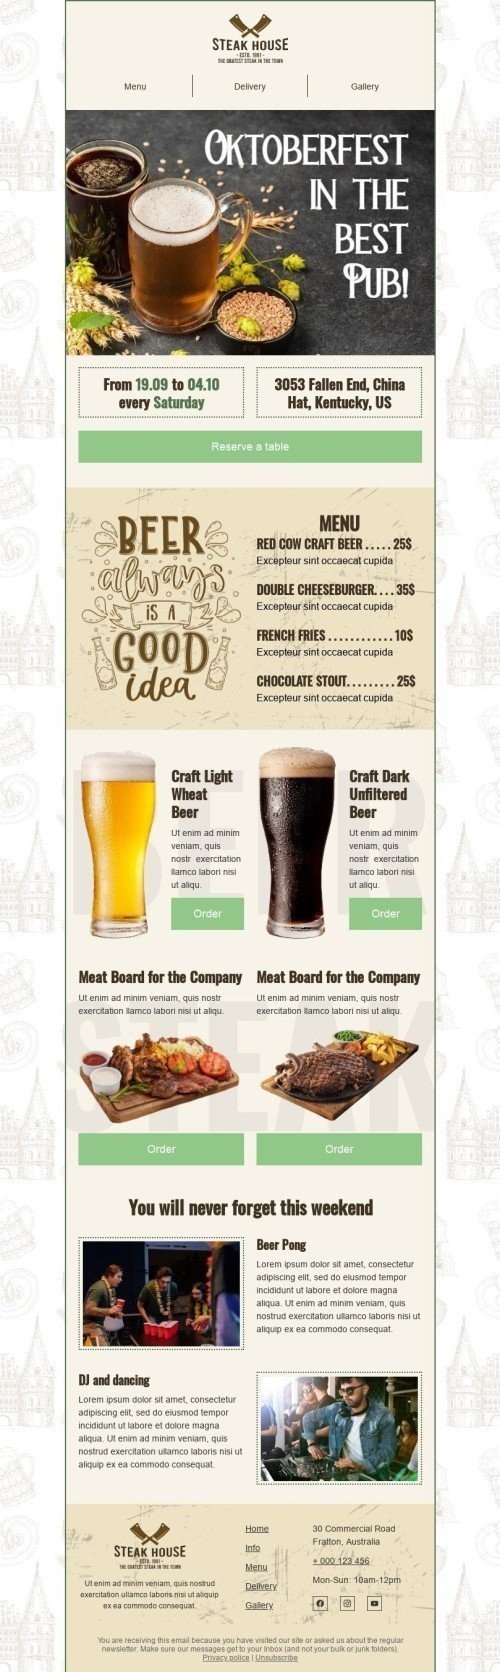 Oktoberfest Email Template «Steak house» for Food industry desktop view